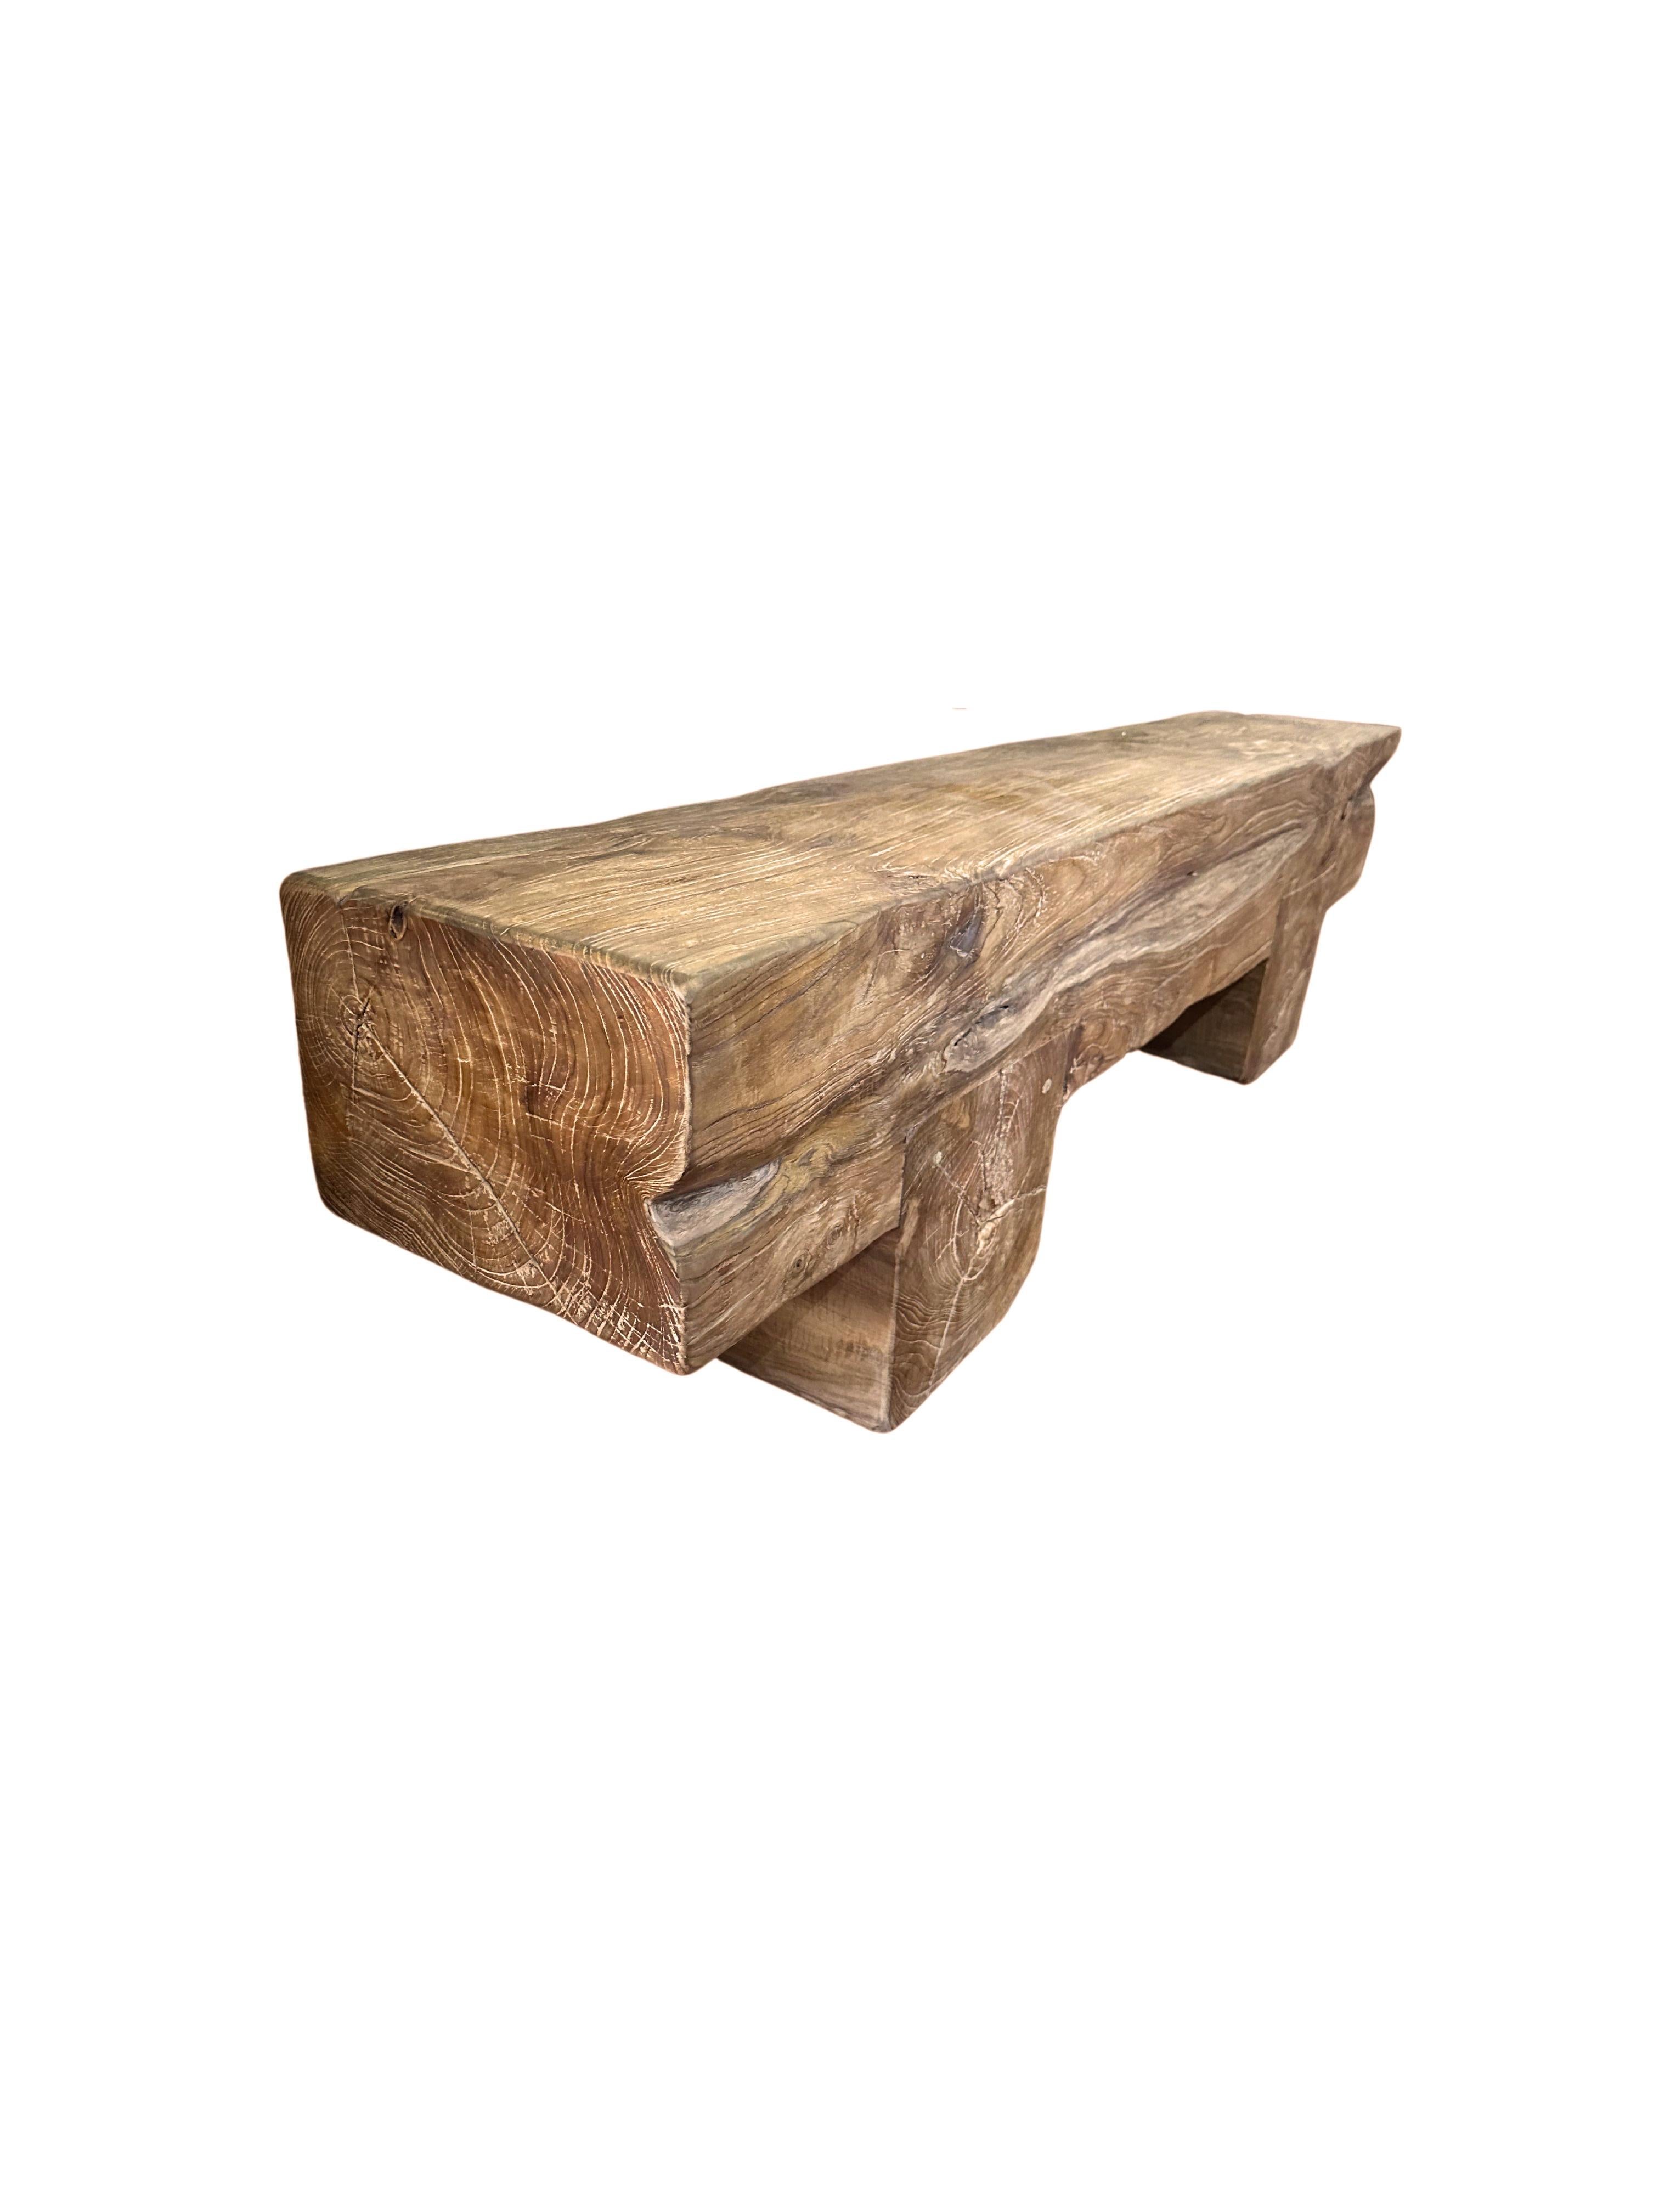 Indonesian Solid Teak Wood Sculptural Bench Modern Organic For Sale